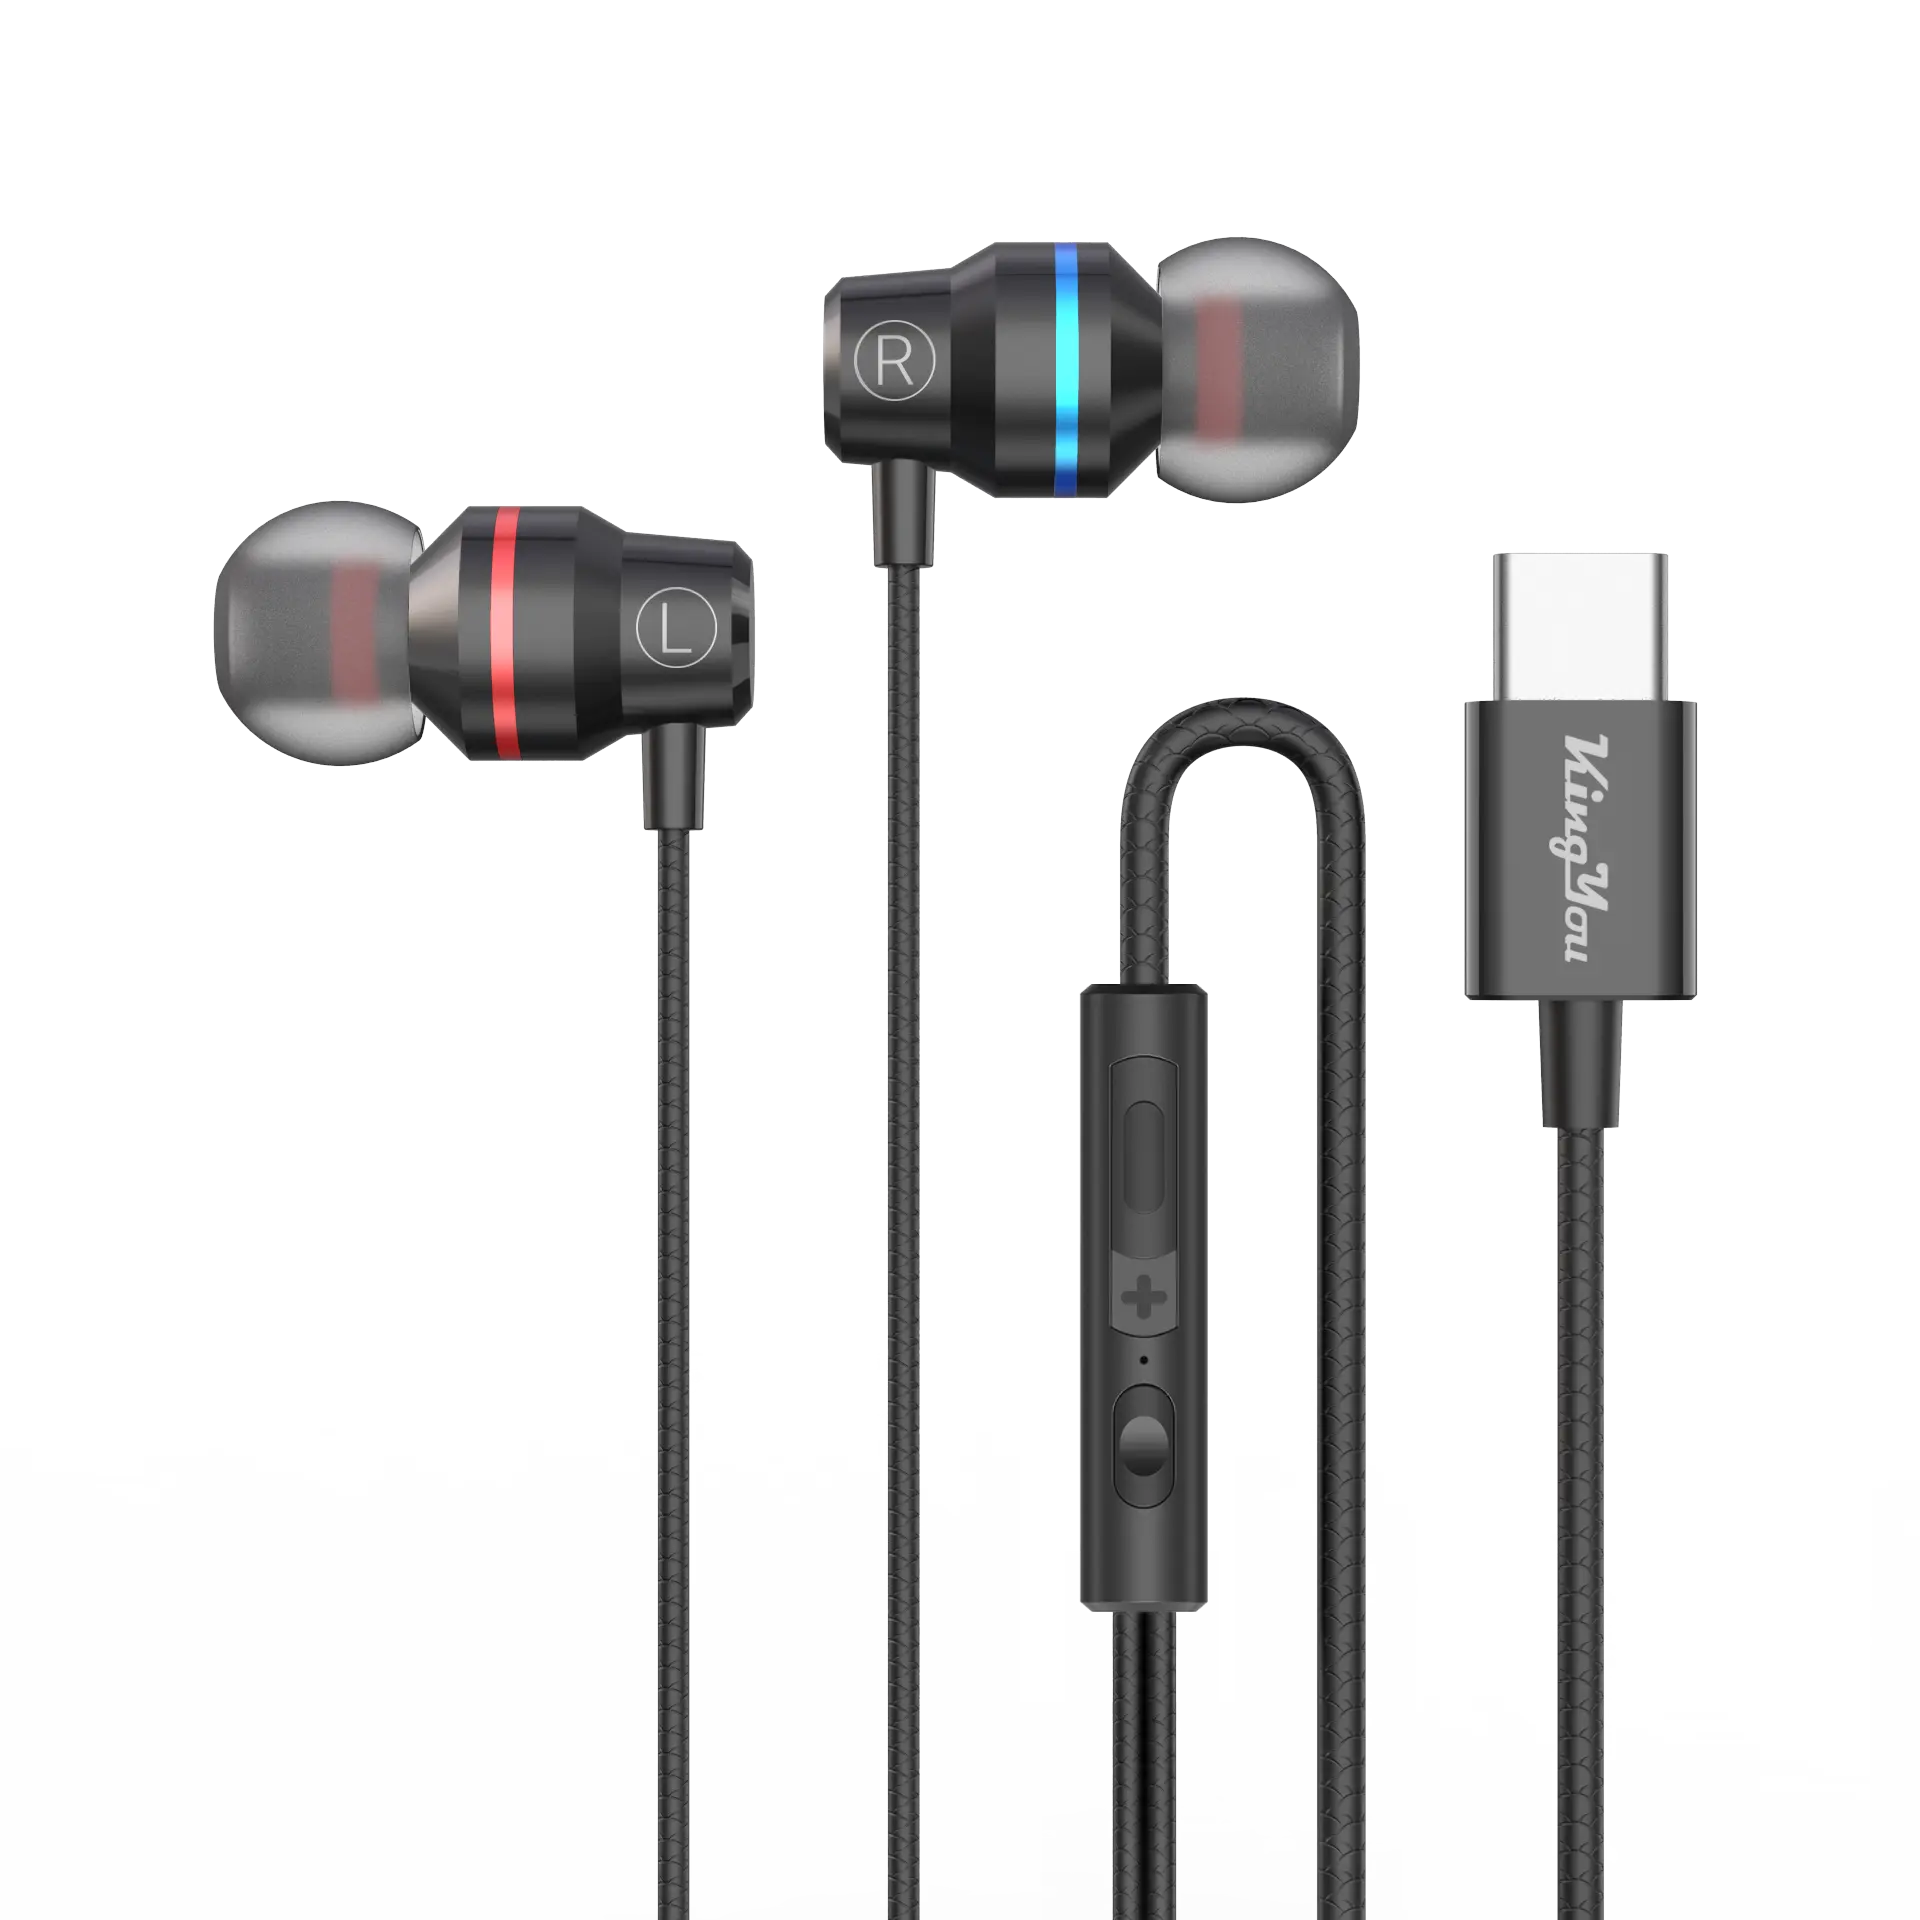 Kingyou Factory Price Tyep c wired earphone with microphone headphone for Huawei Xiaomi